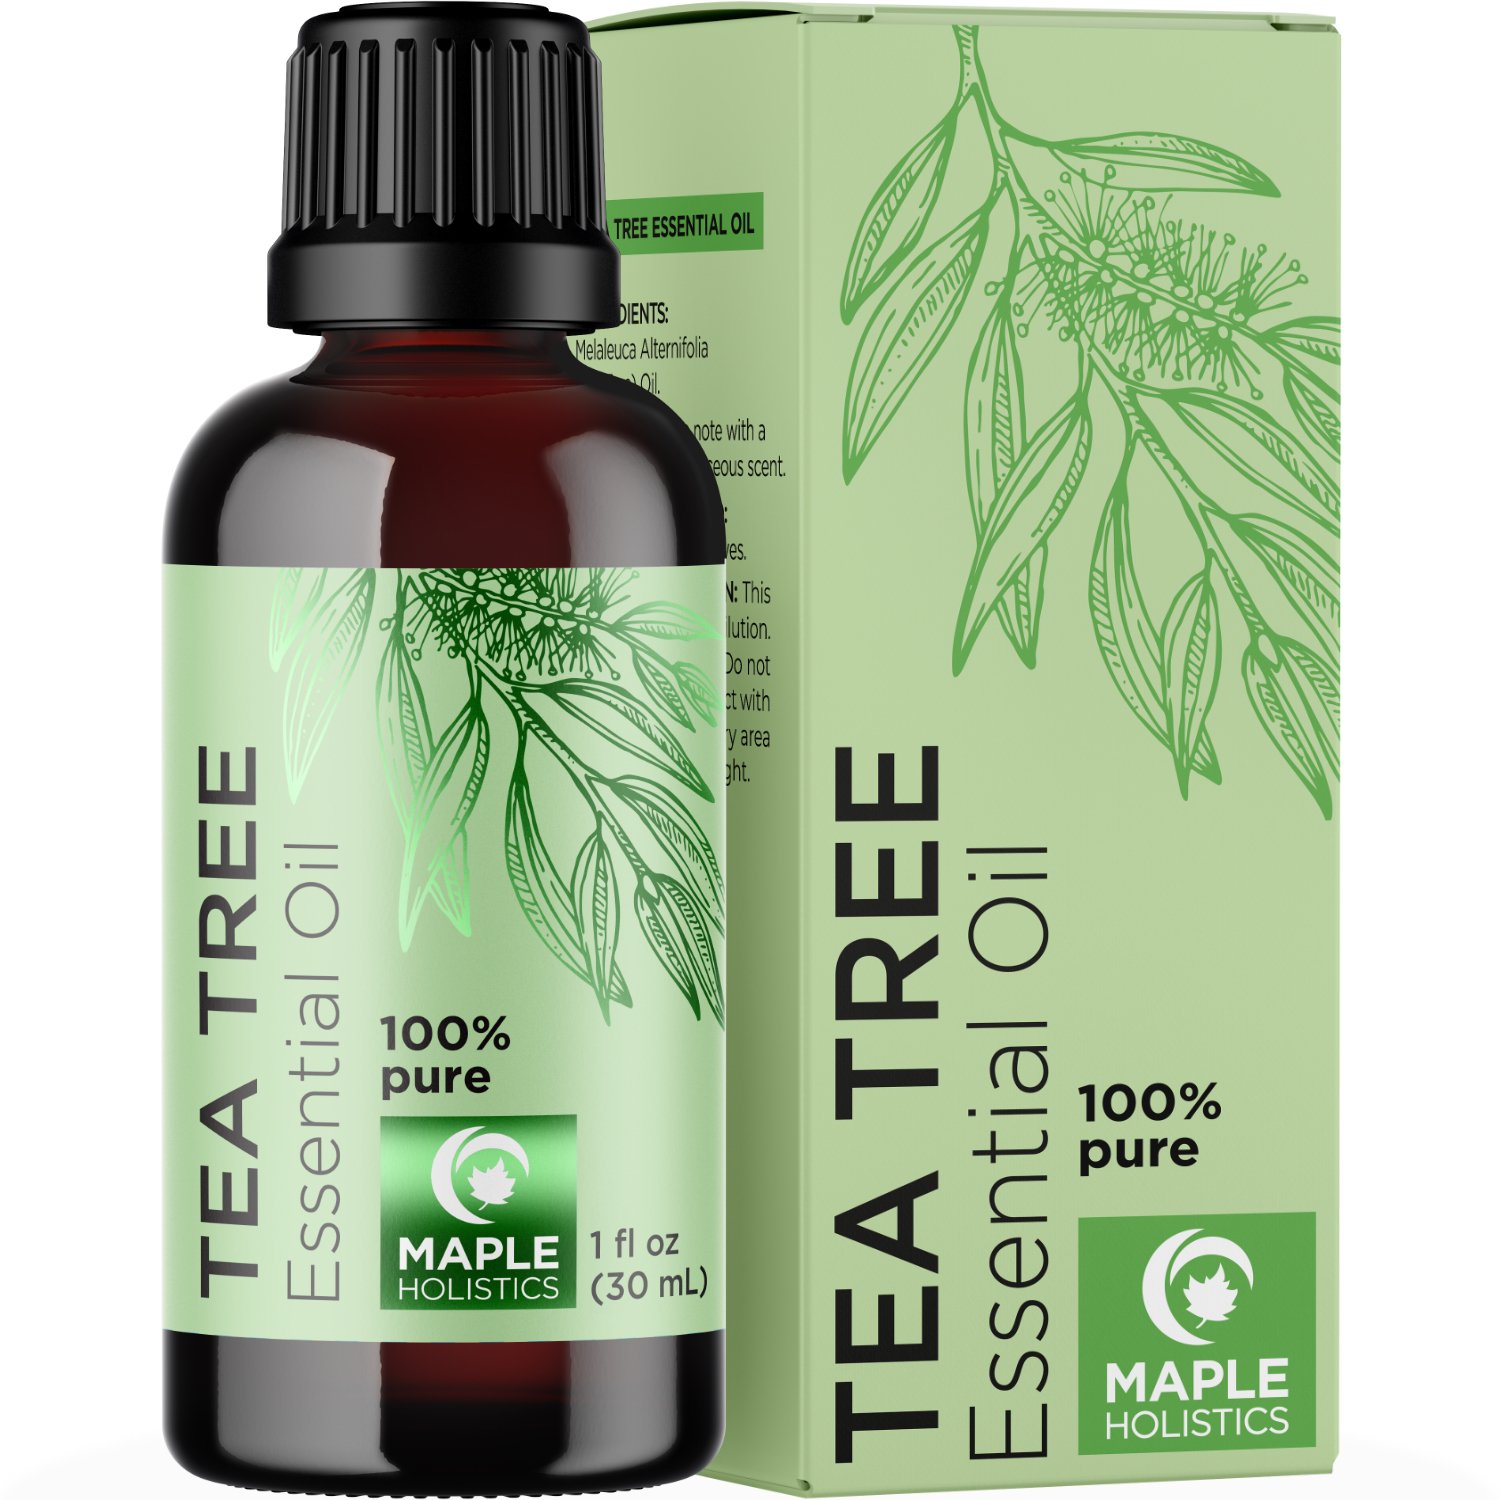 Maple Holistics Tree Essential Oil for Hair, Skin & Diffuser, 1fl oz Walmart.com